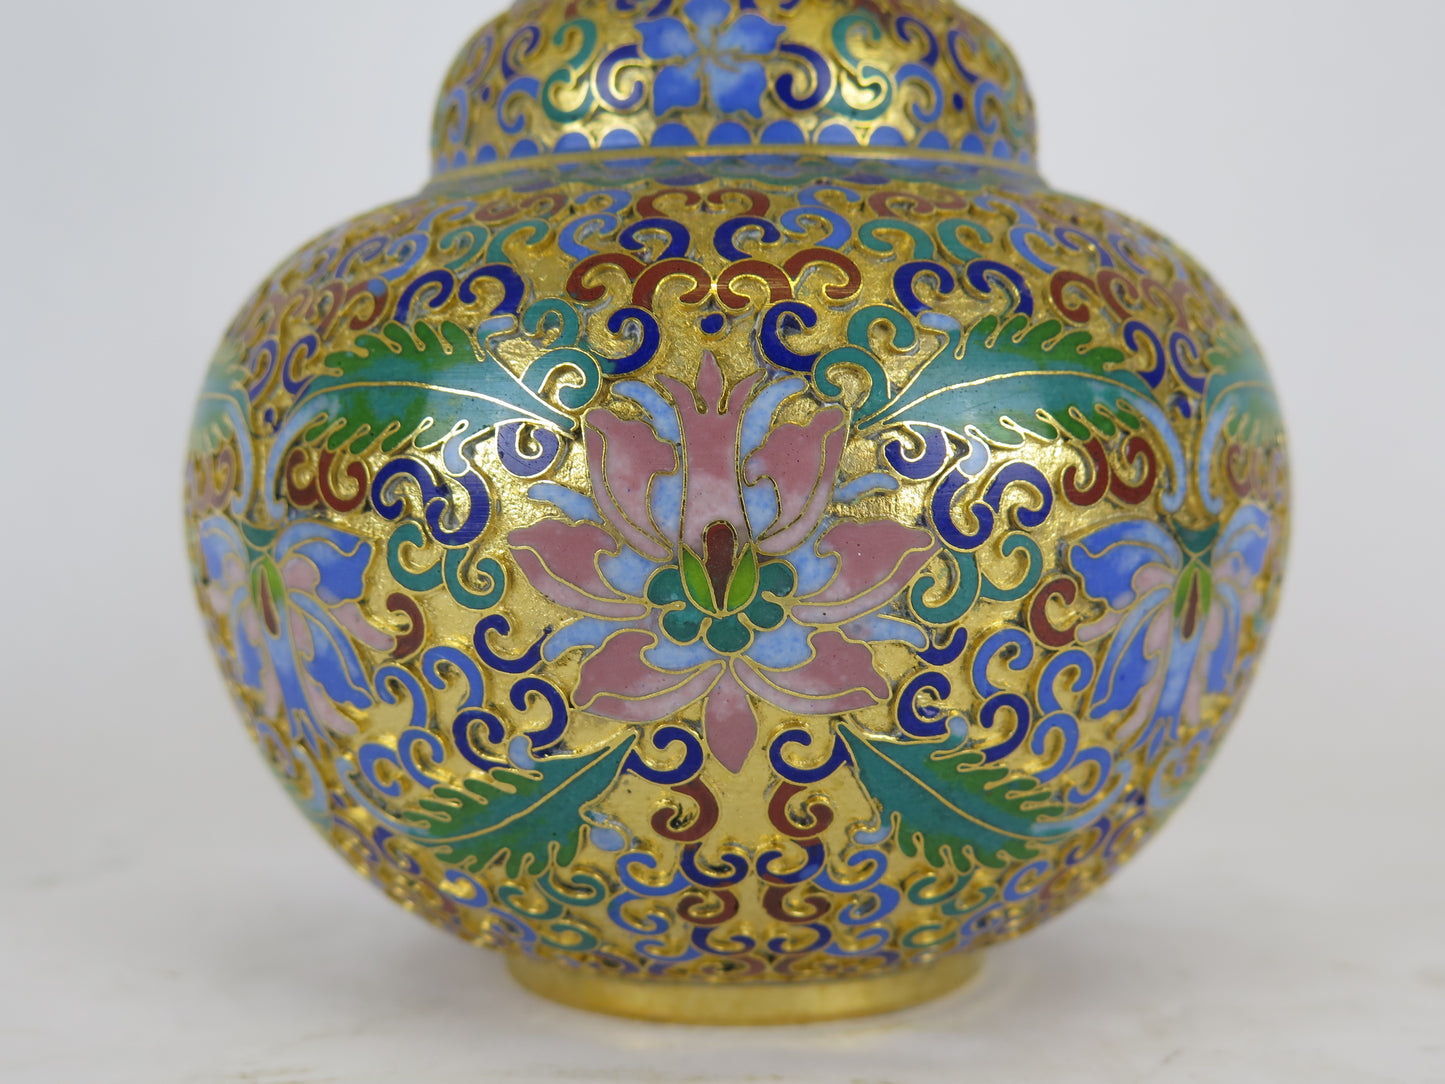 Vintage colorful cloisonné vase high quality Chinese crafts floral CM4